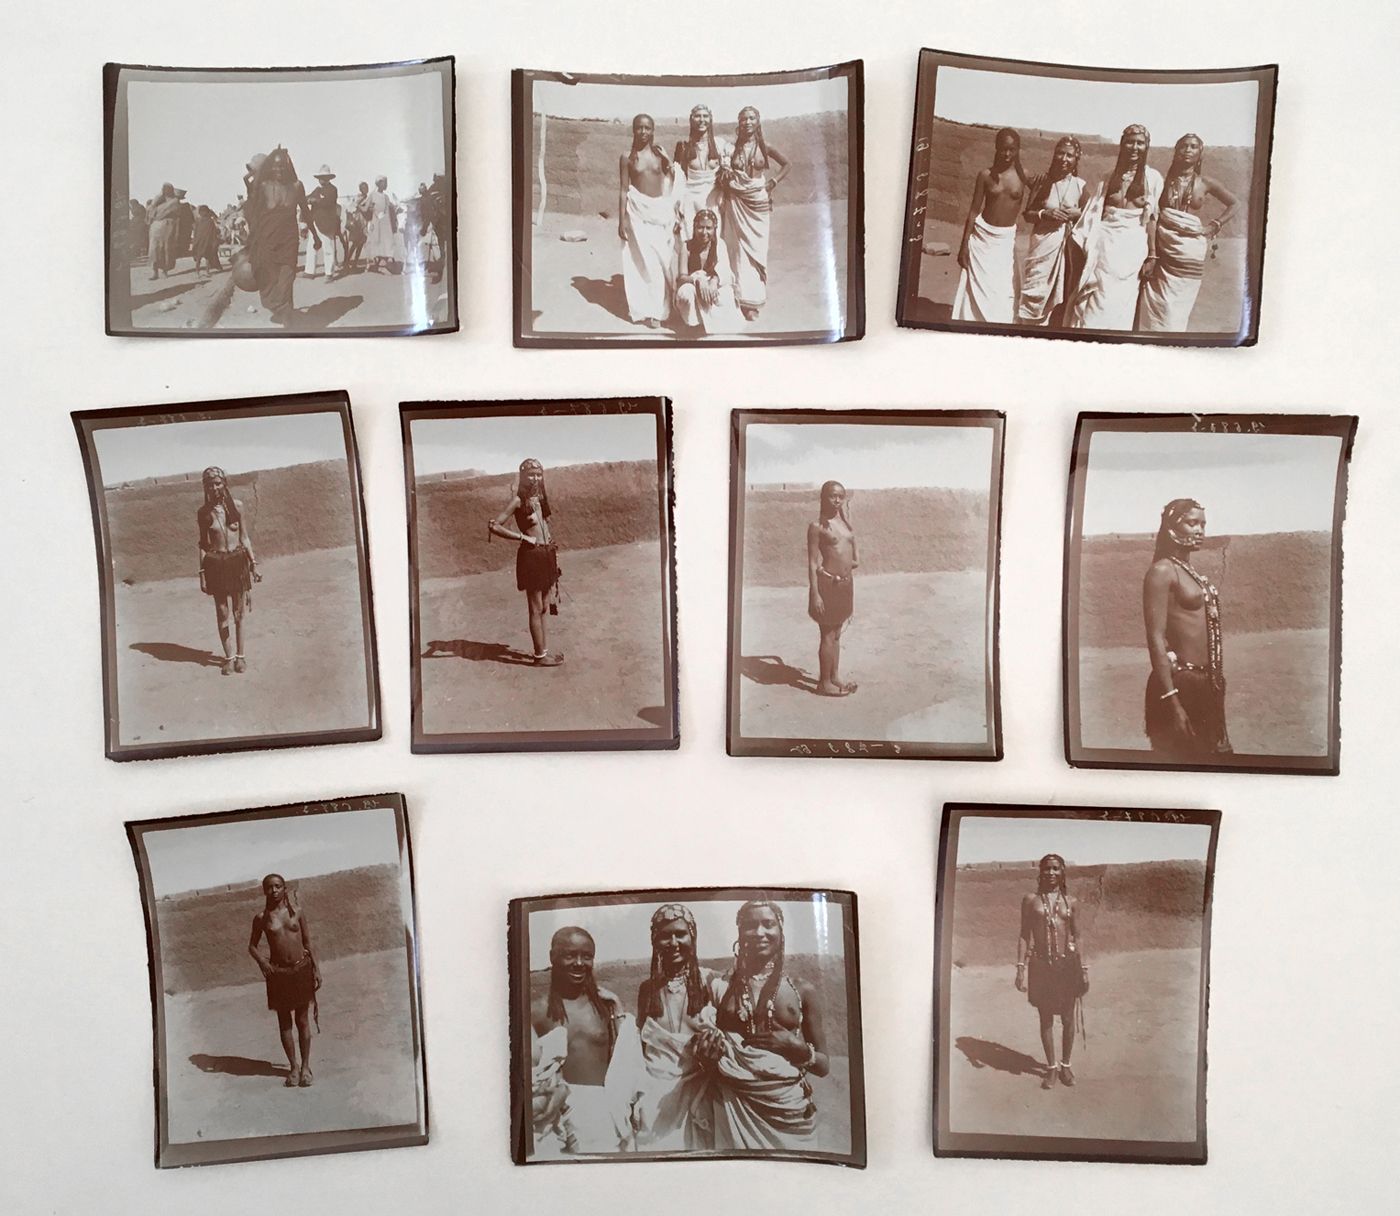 Null [身份不明的摄影师]。露天的非洲妇女，约 1910 年。10 张银质照片，12 x 9 厘米。背面空白。